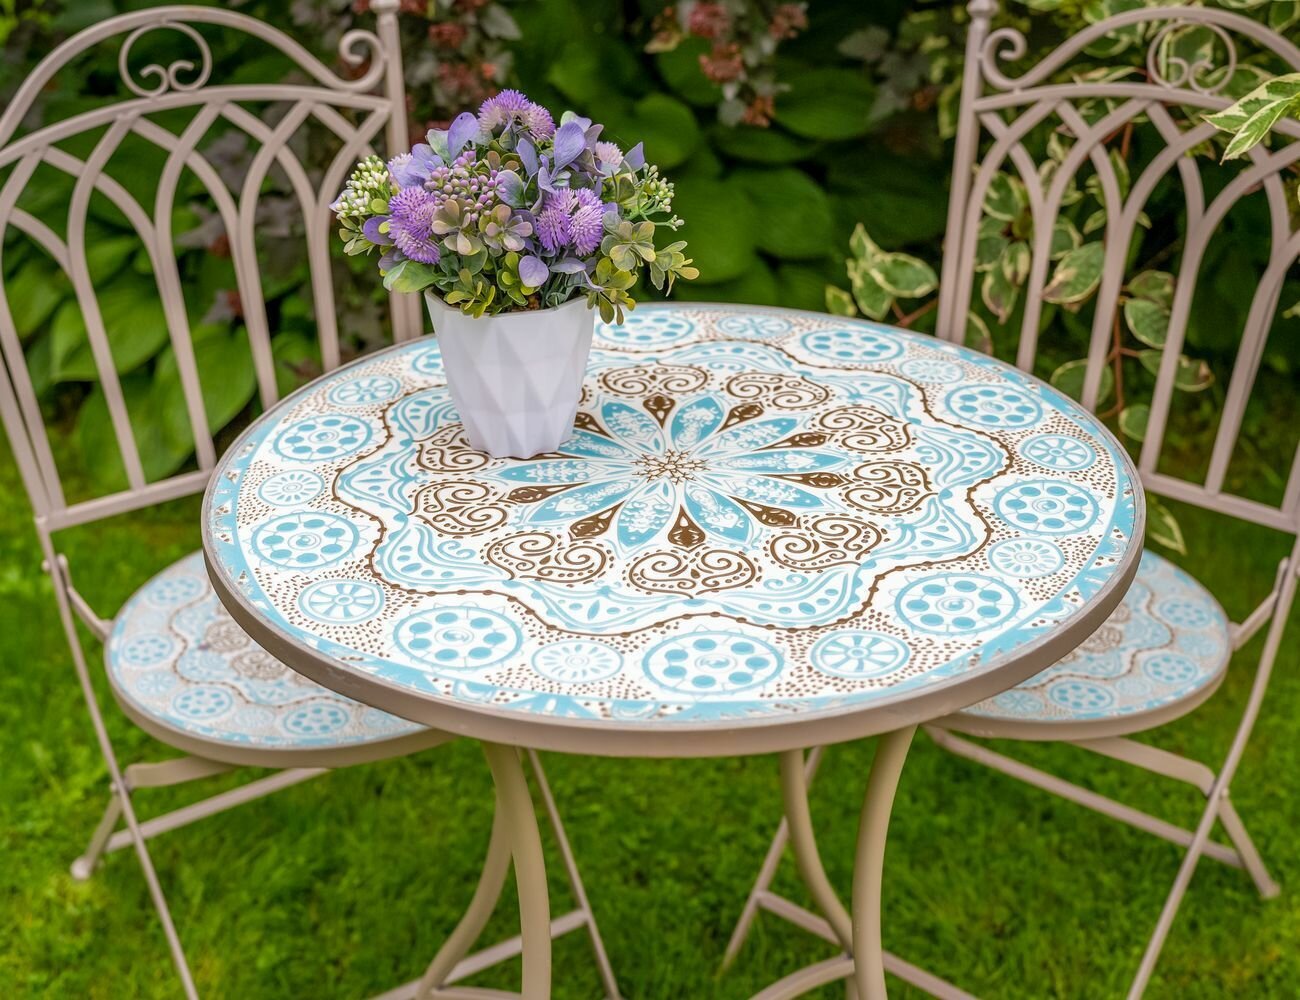 Садовая мебель с мозаикой TURKISH ROMANCE (стол и 2 стула), металл, керамика, Kaemingk 806218/806220-набор